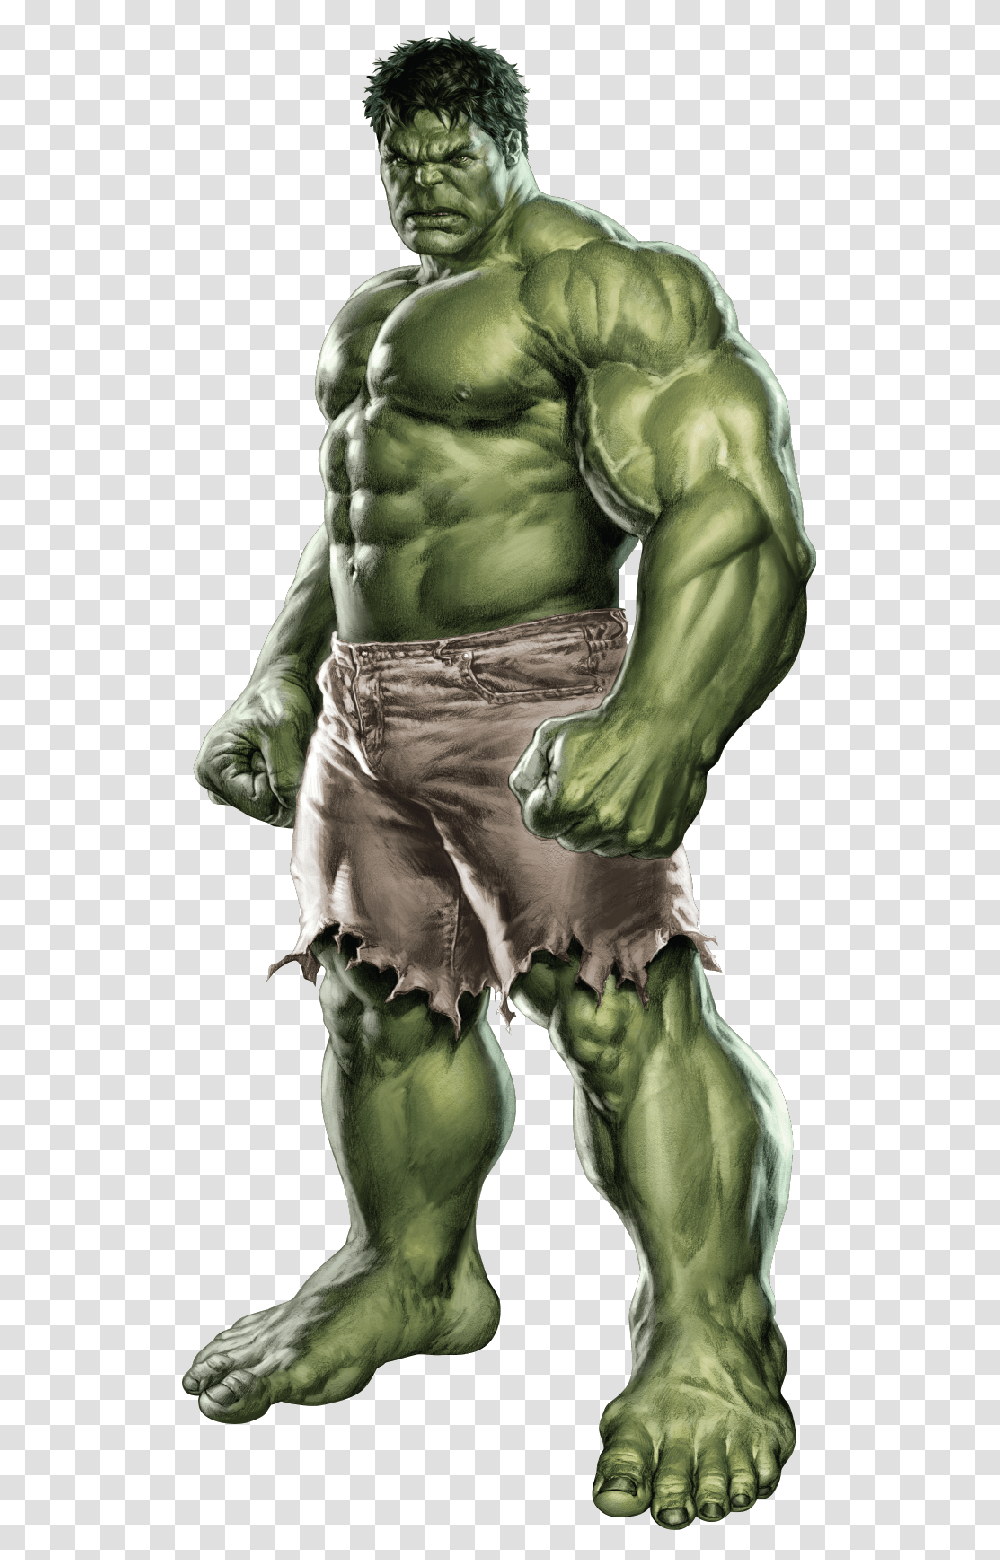 Hulk Download Image Hulk, Person, Human, Torso, Hand Transparent Png